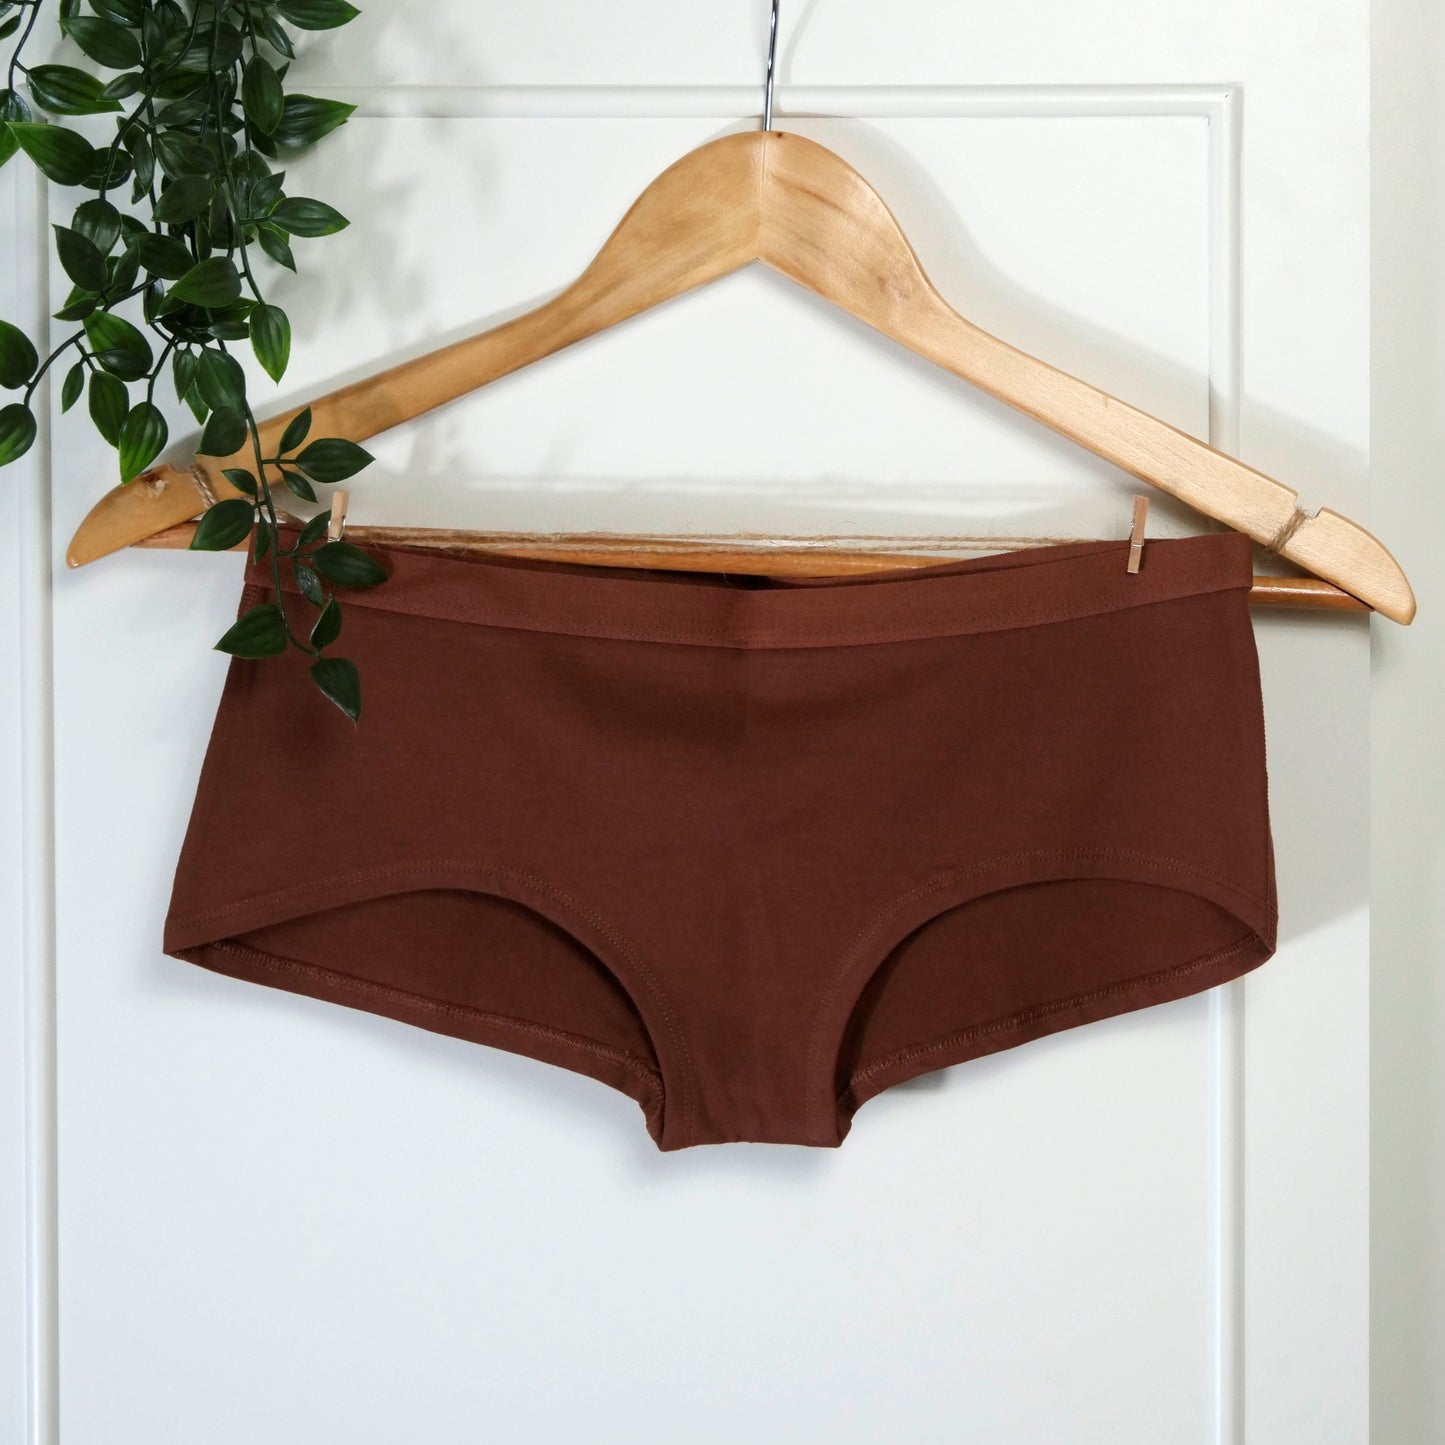 Women's organic cotton boy shorts in chestnut (mid nude)